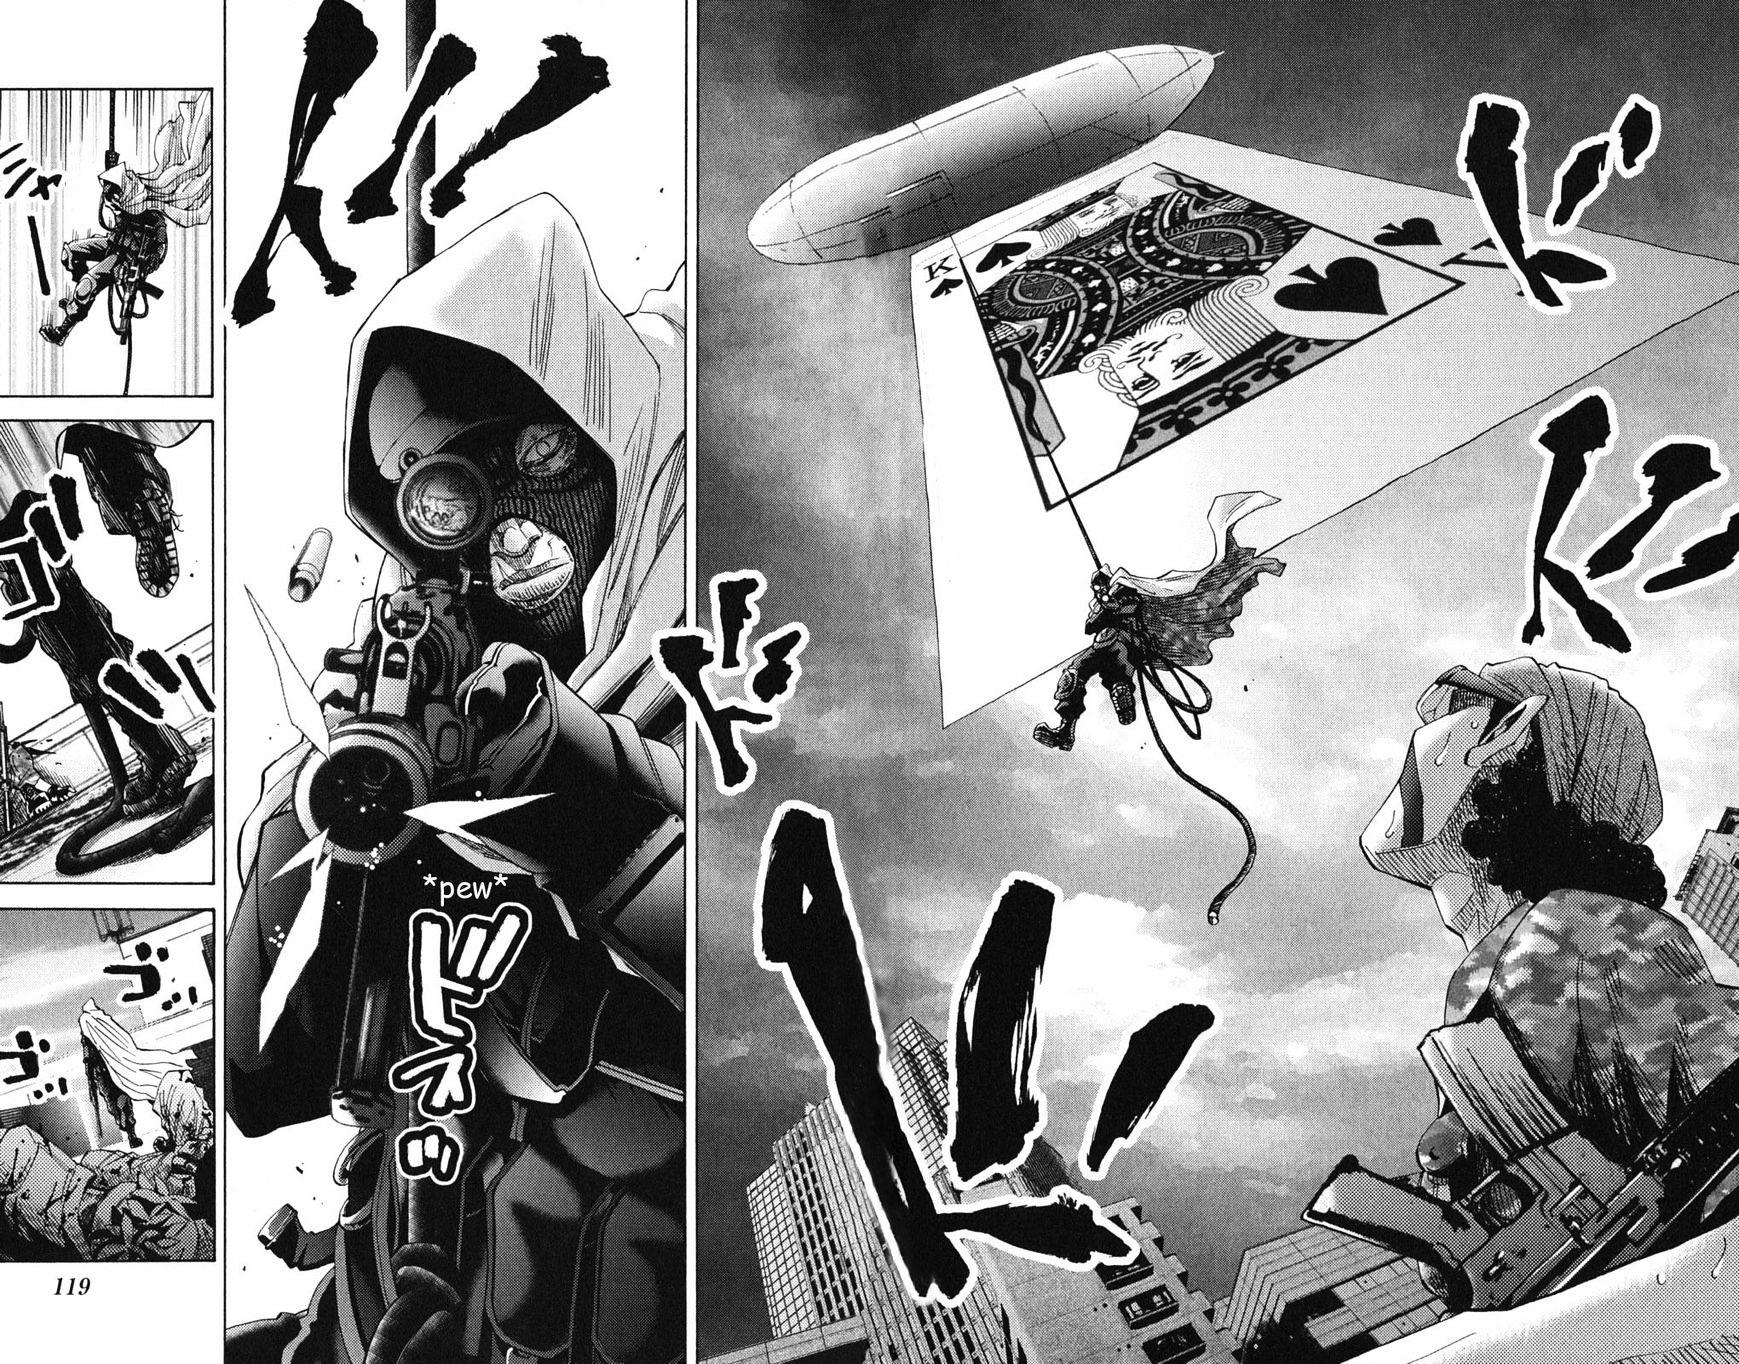 Imawa No Kuni No Alice Chapter 49.1 : Side Story 5 - King Of Spades (1) page 13 - Mangakakalot